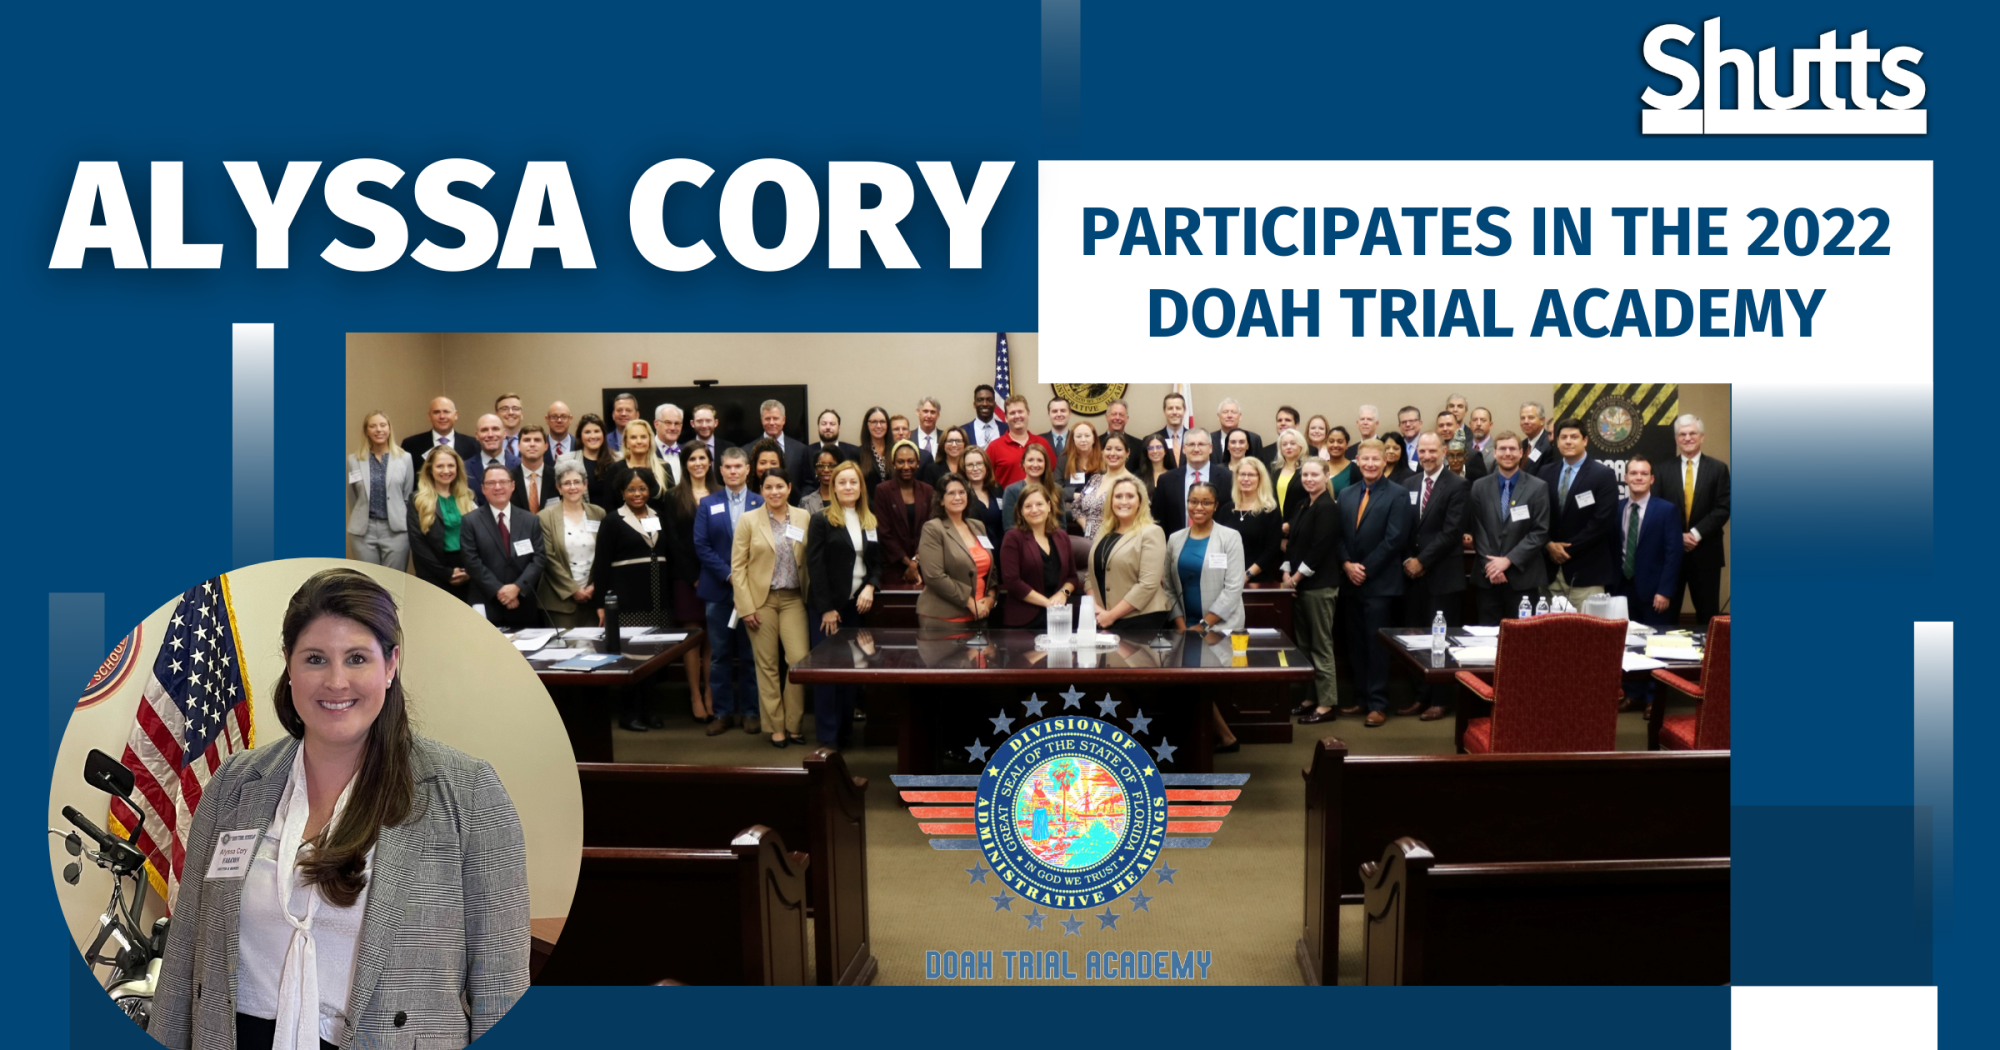 Alyssa Cory Participates in the 2022 DOAH Trial Academy